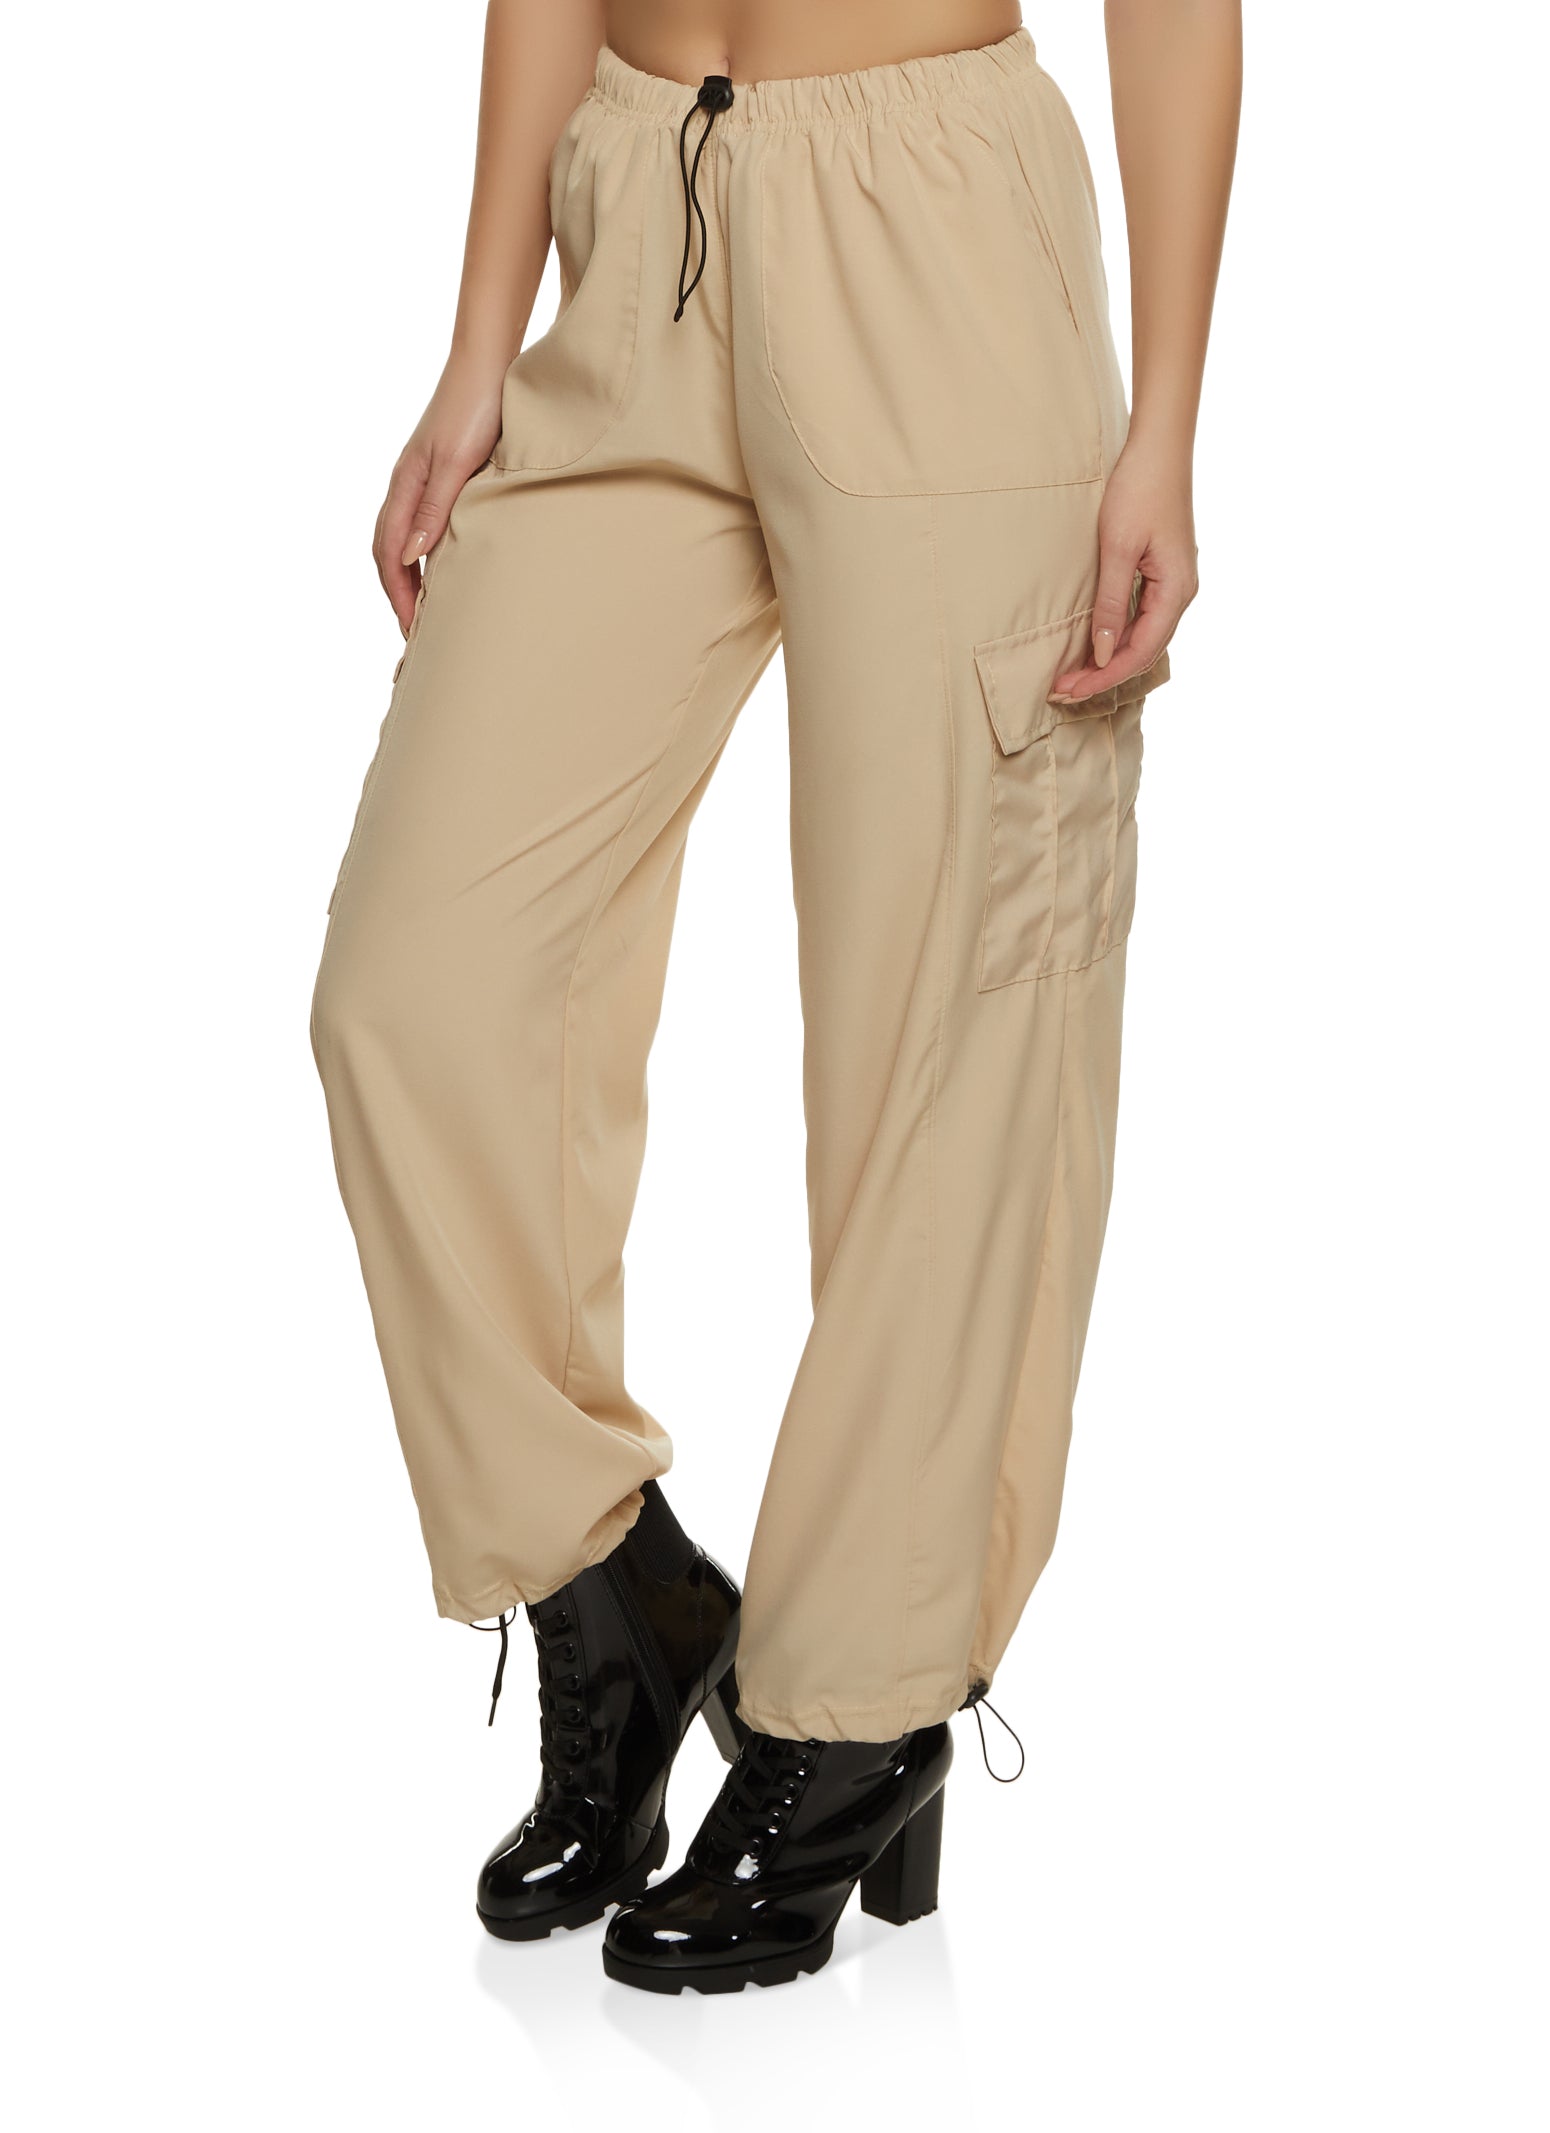  Women's Pants Solid Belted Cargo Pants Women's Pants